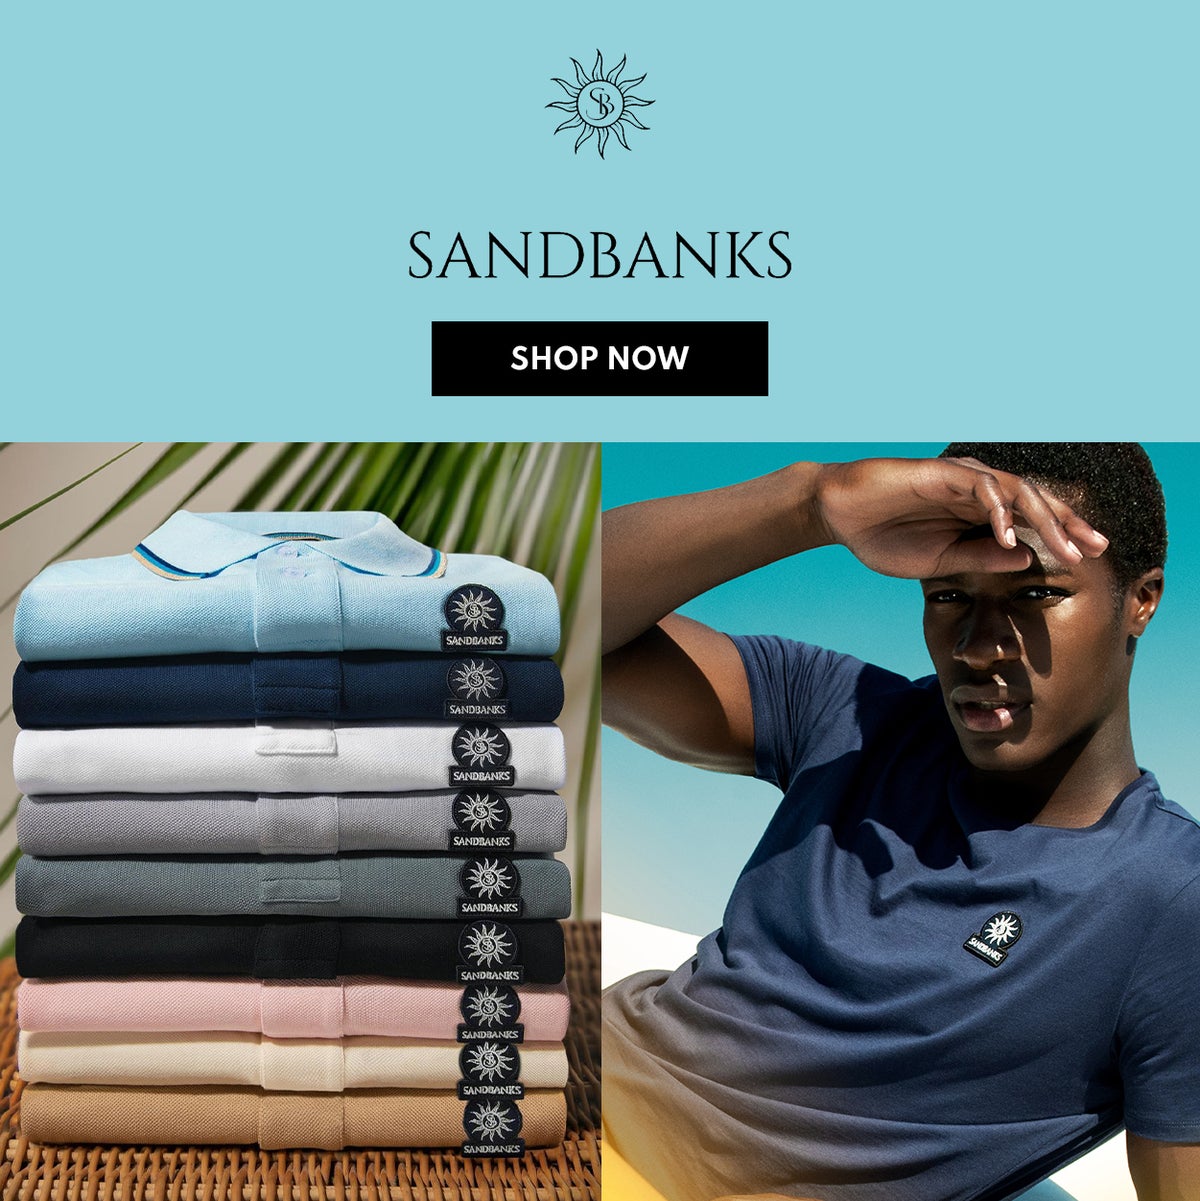 Sandbanks Shop Now